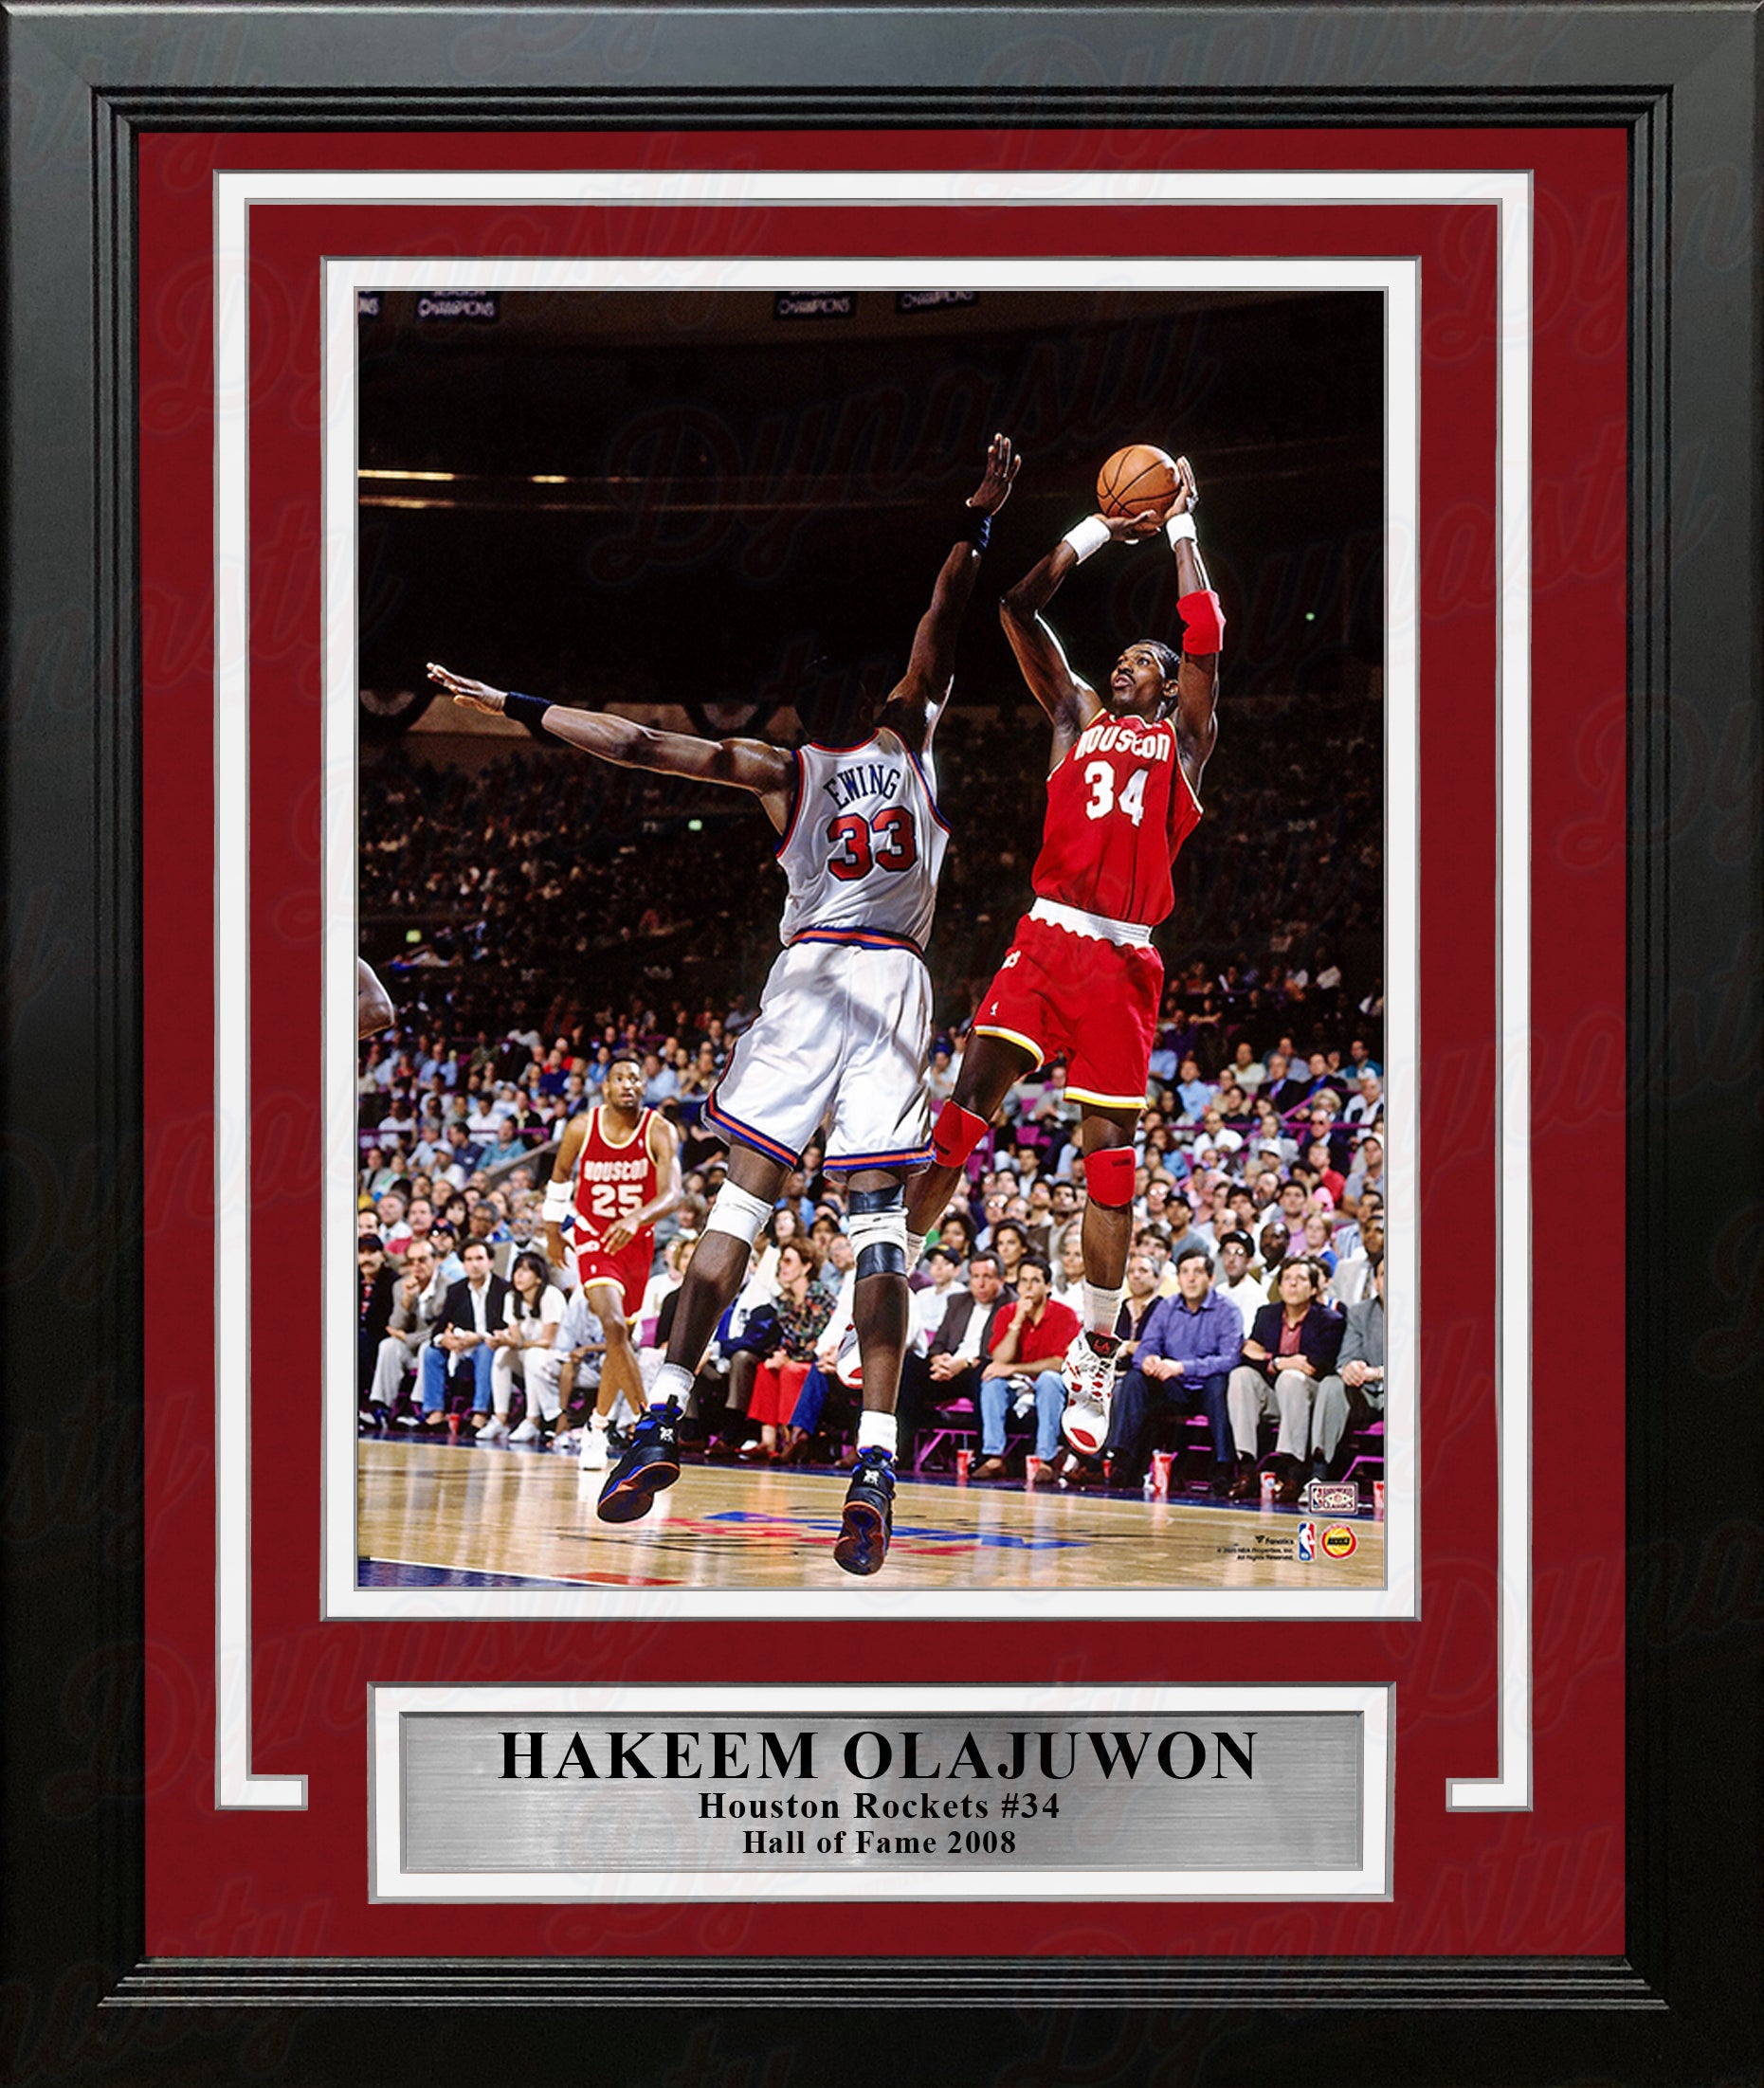 Hakeem Olajuwon in Action Houston Rockets 8" x 10" Framed Basketball Photo - Dynasty Sports & Framing 